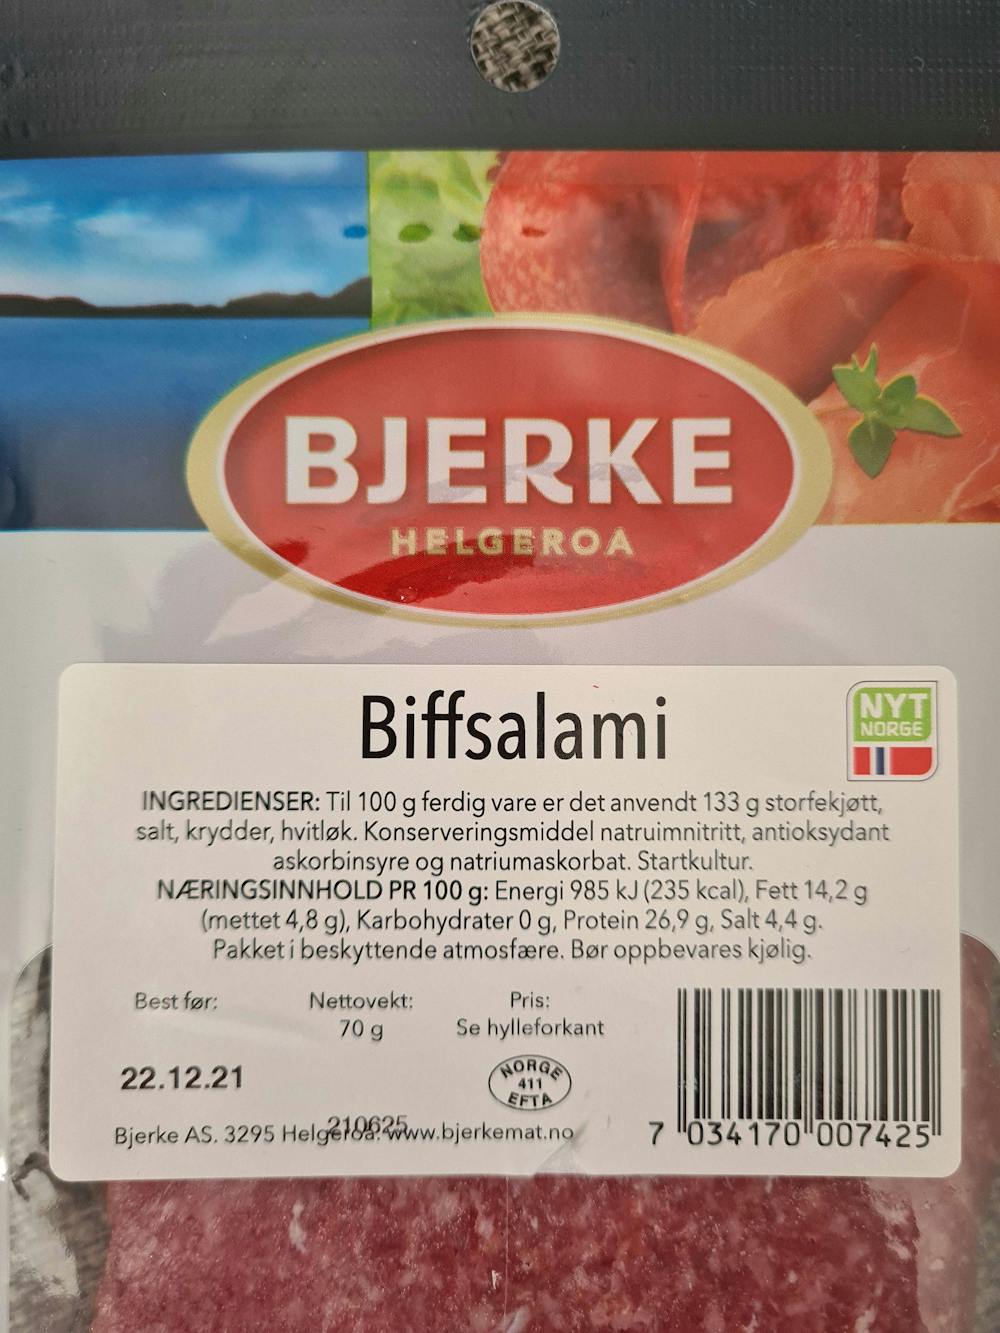 Ingredienslisten til Biffsalami, Bjerke